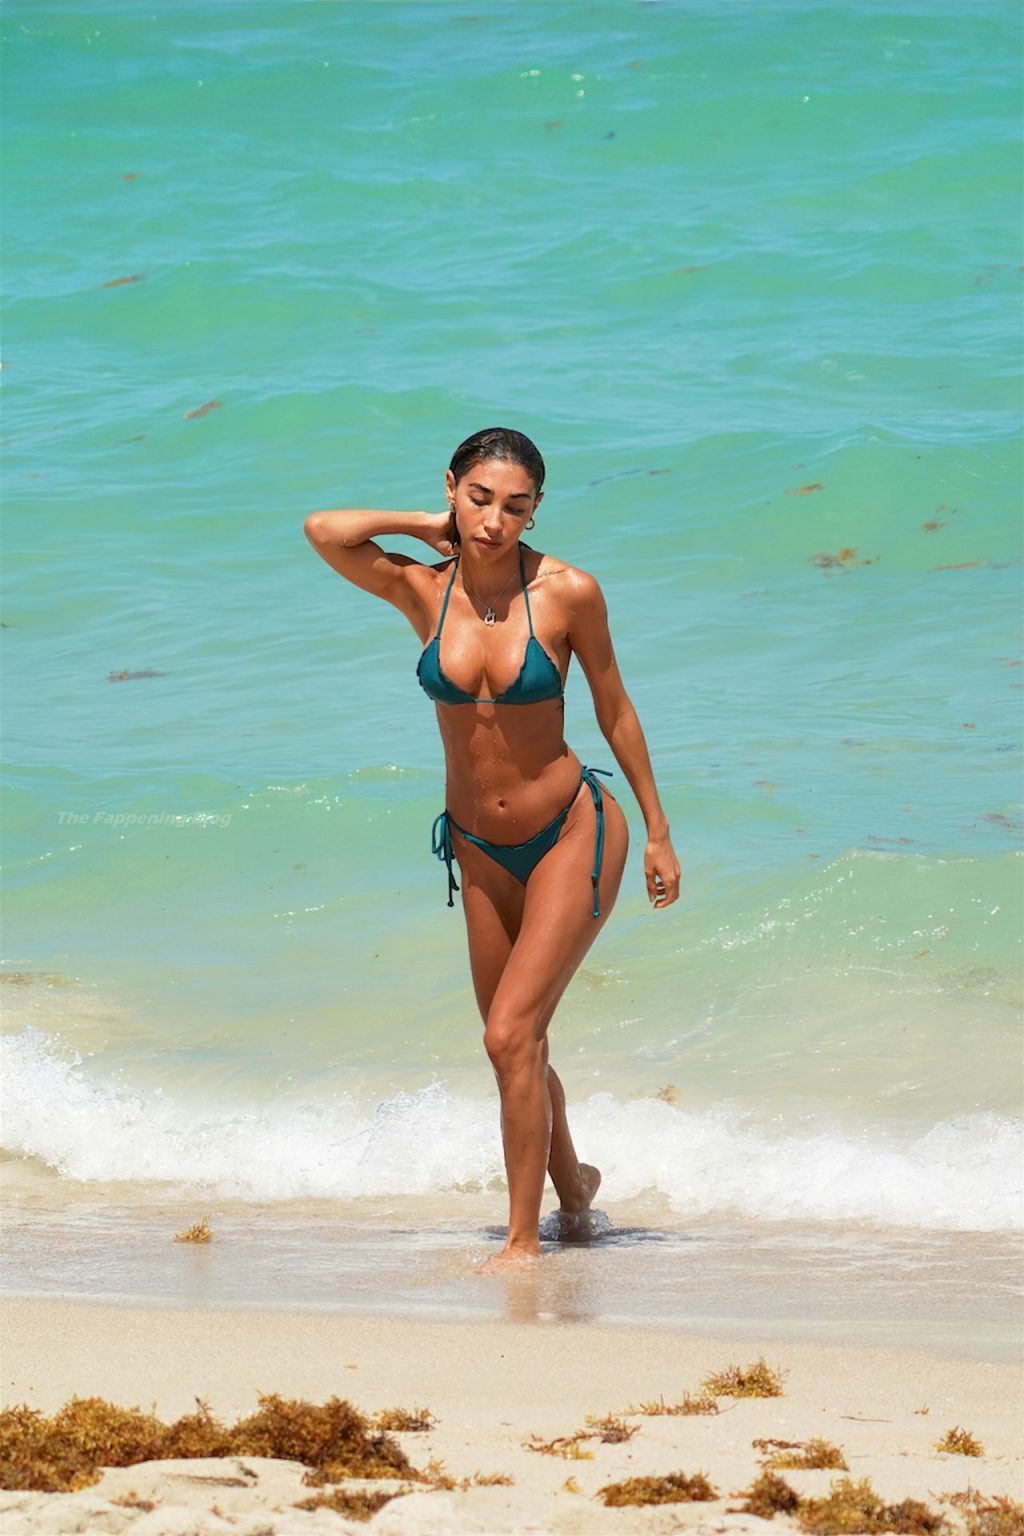 Chantel Jeffries Looks Amazing in a Green Bikini on the Beach in Miami (86 Photos)